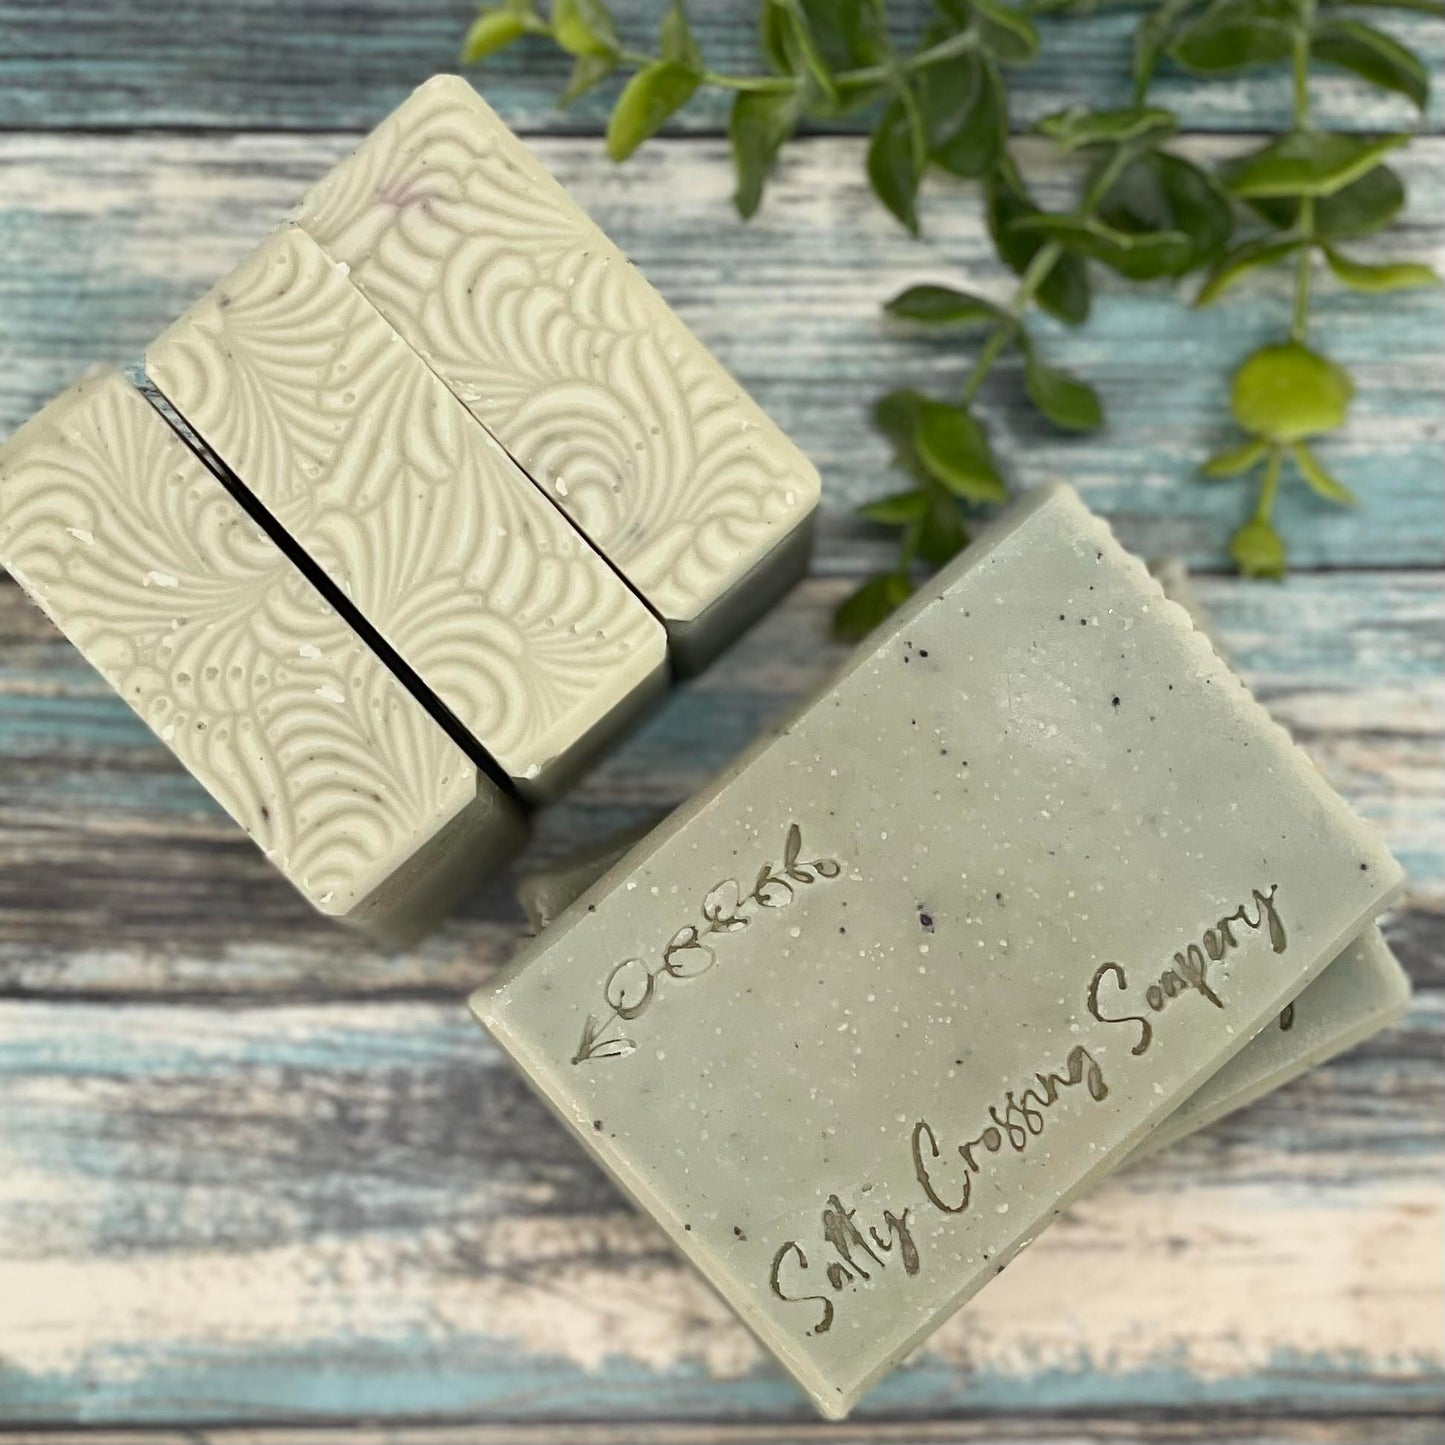 Eucalyptus Mint Soap | All Natural Artisan Bath or Shower Bar | Handmade with Shea Butter, Coconut Milk | Earth & Vegan Friendly, Zero Waste